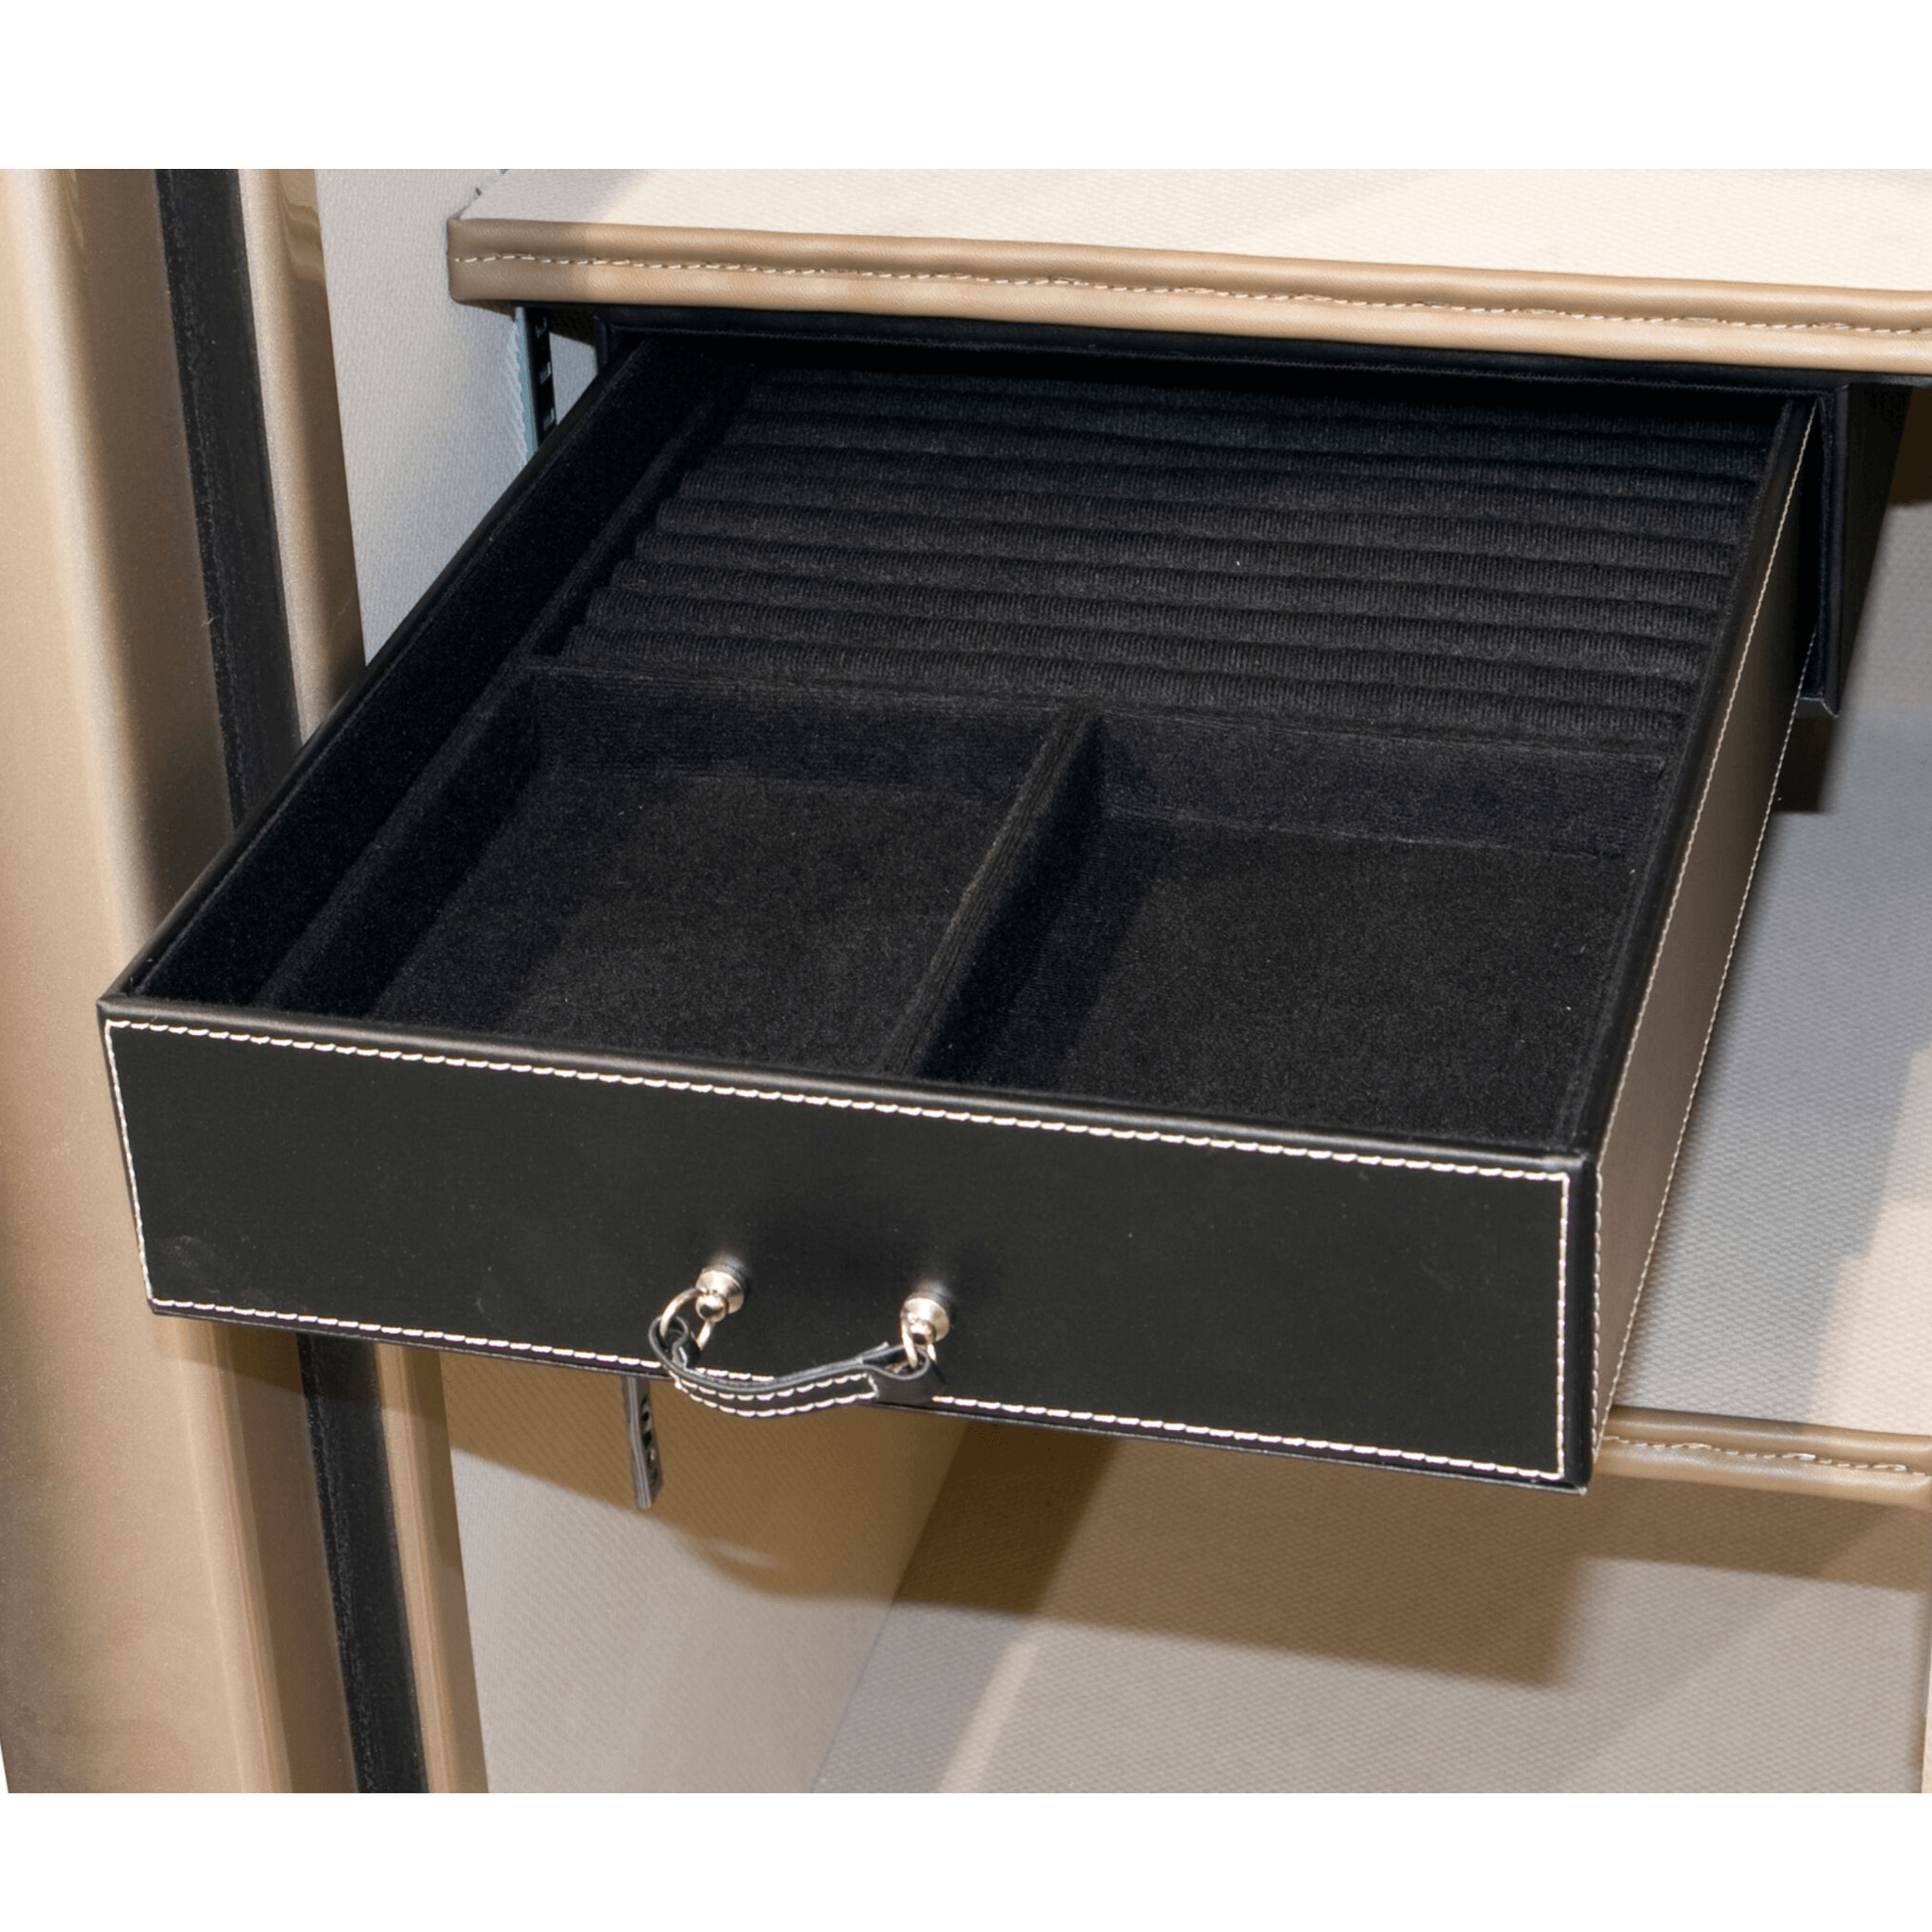 Accessory - Storage - Jewelry Drawer - 11.5 inch - under shelf mount - 35-50 size safes, photo 1